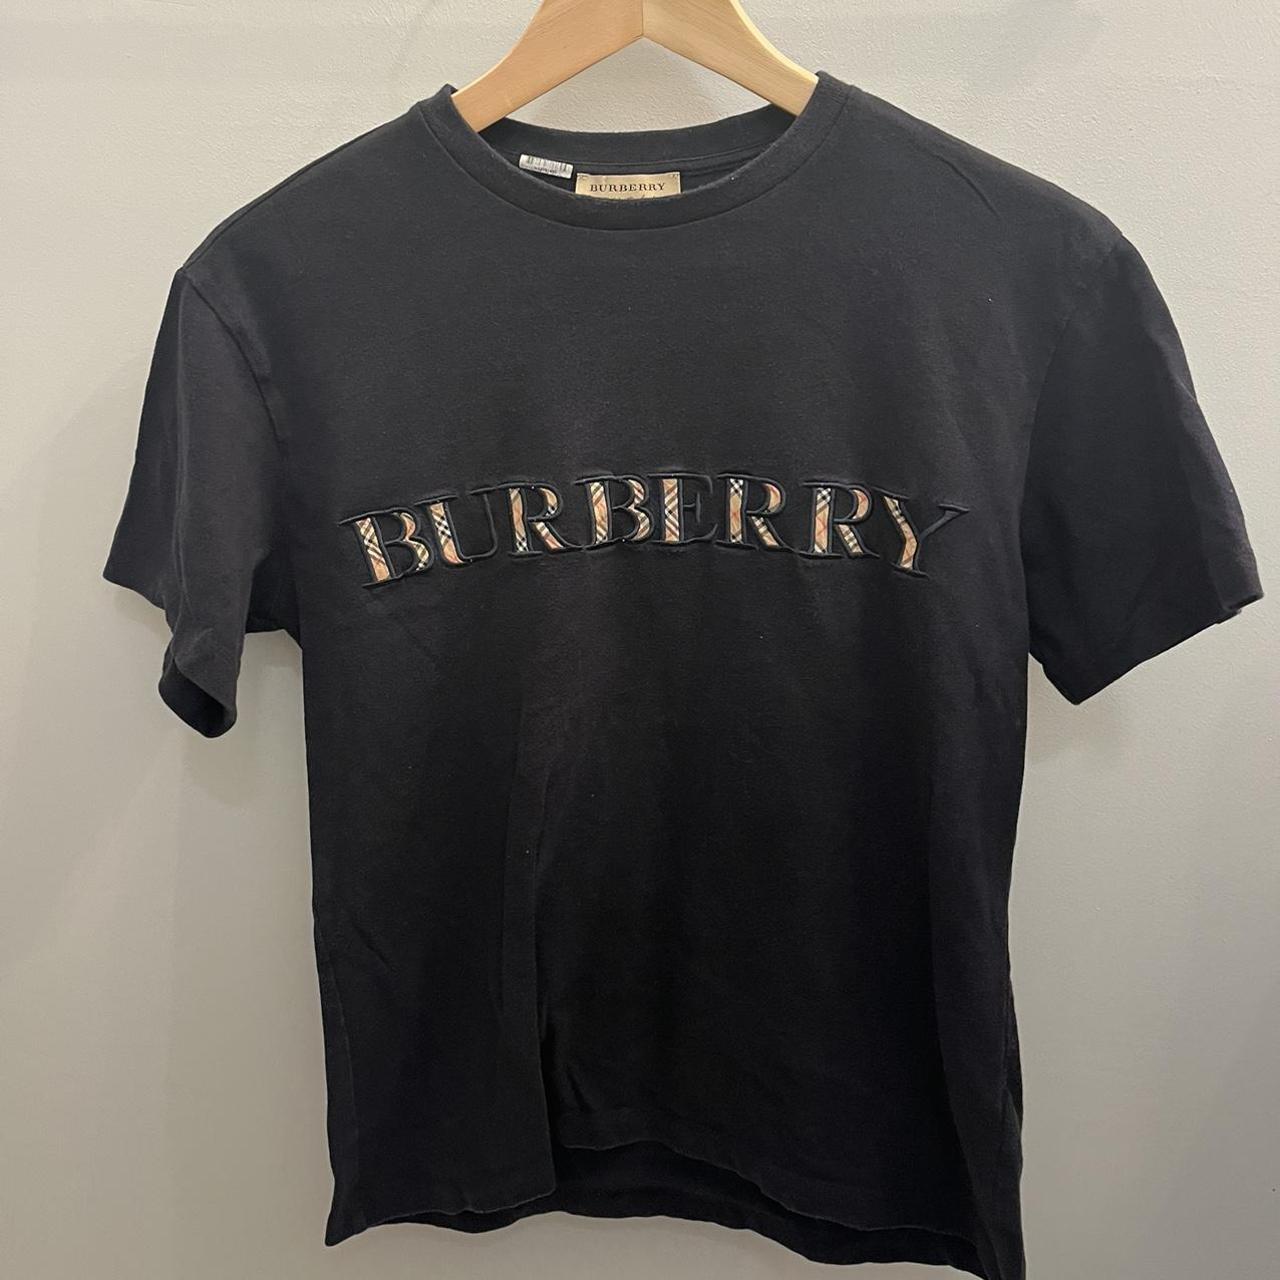 Burberry Women's Black T-shirt